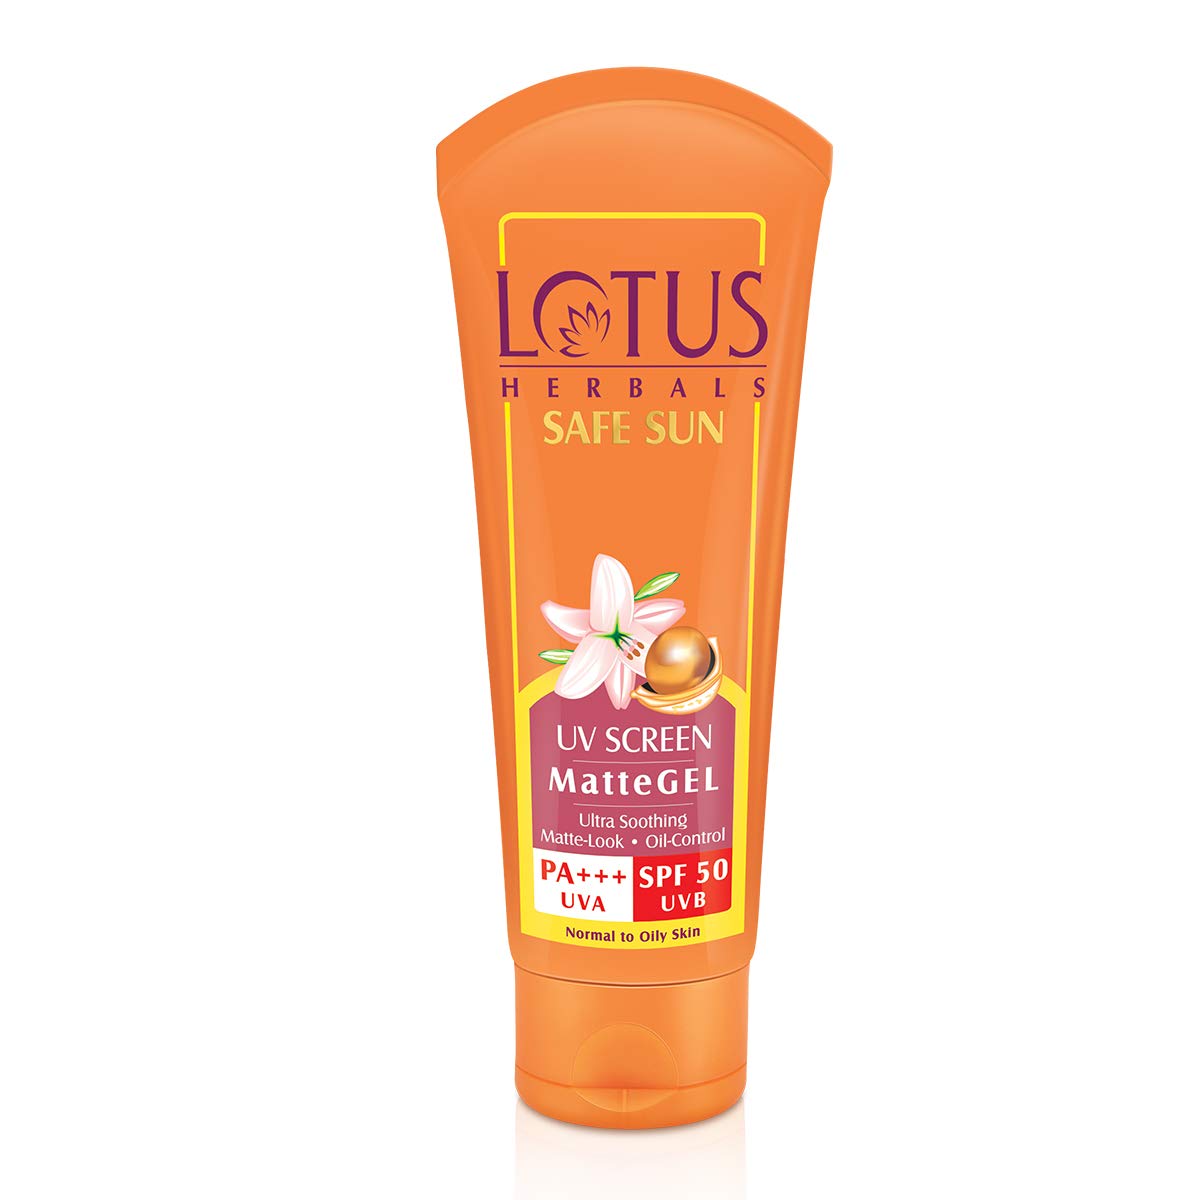 Lotus Herbals Safe Sun UV Sunscreen Matte Gel PA+++ Spf 50 (50gm)